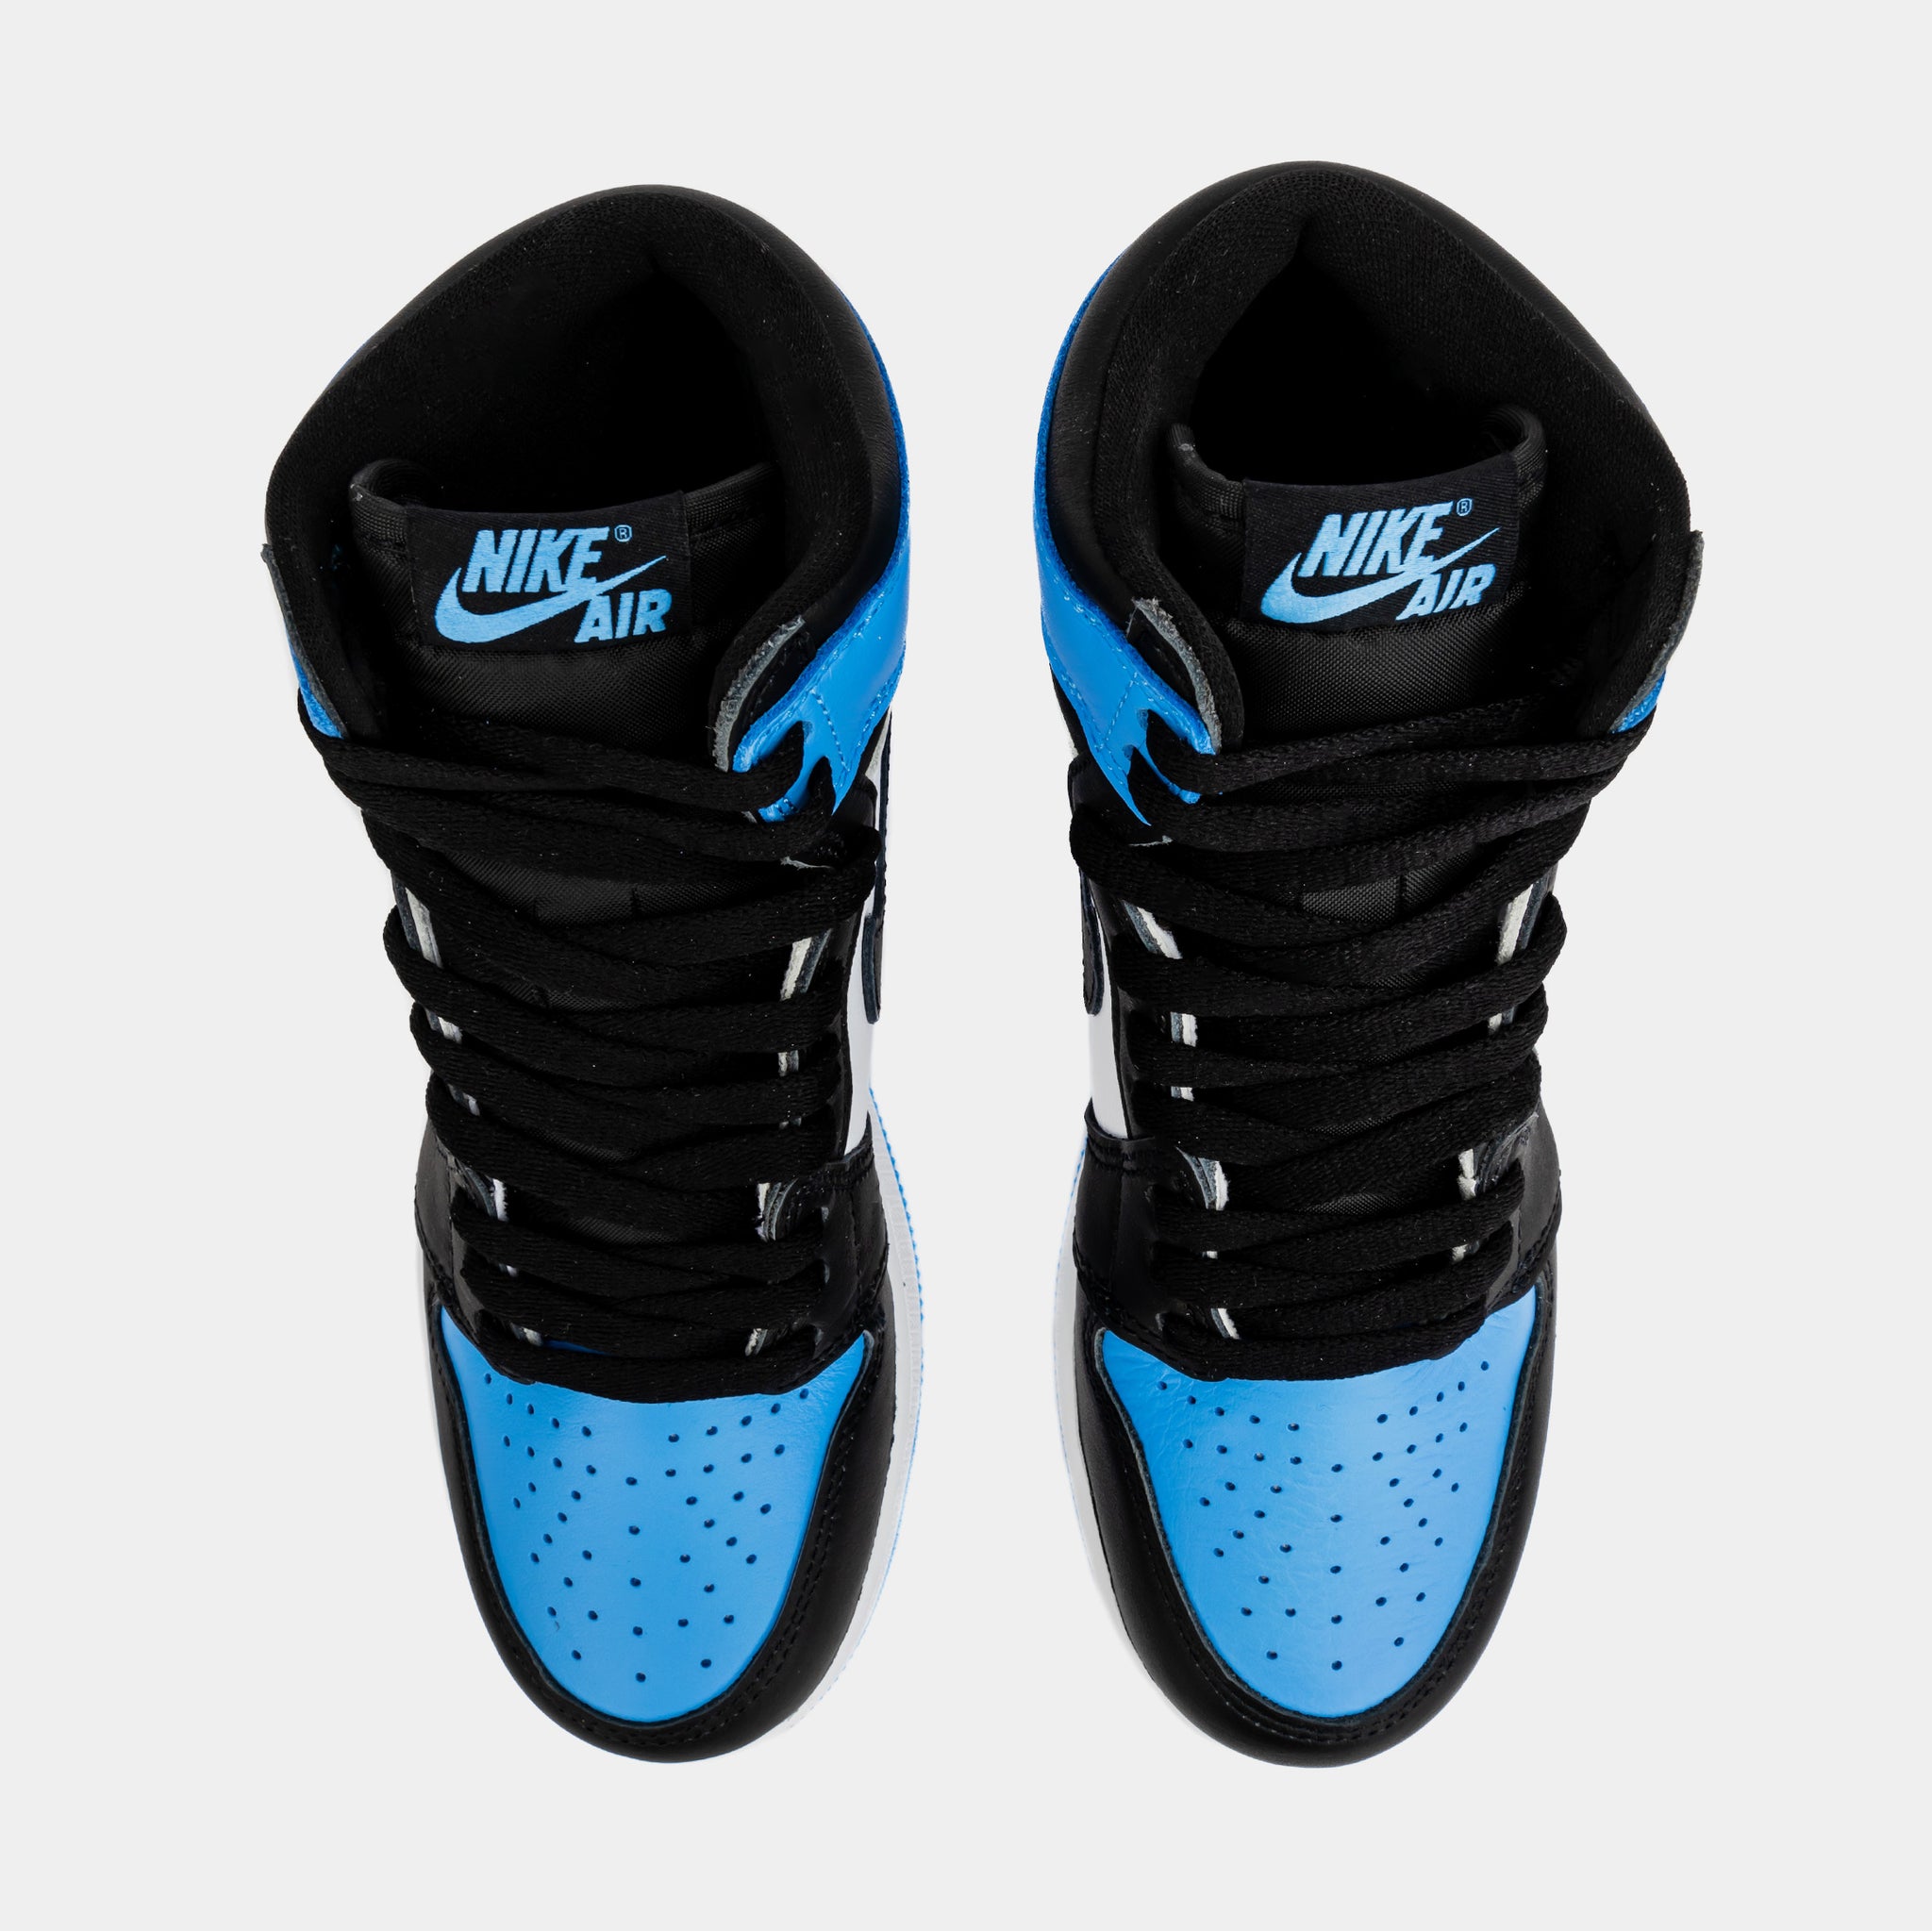 Jordan Retro 1 “University Blue” Size 2y -$100 Sizes 4y, 10, 13 -$300  🔥Open Til 8PM 🔥 @sneakersinchoover @sneakersincbham